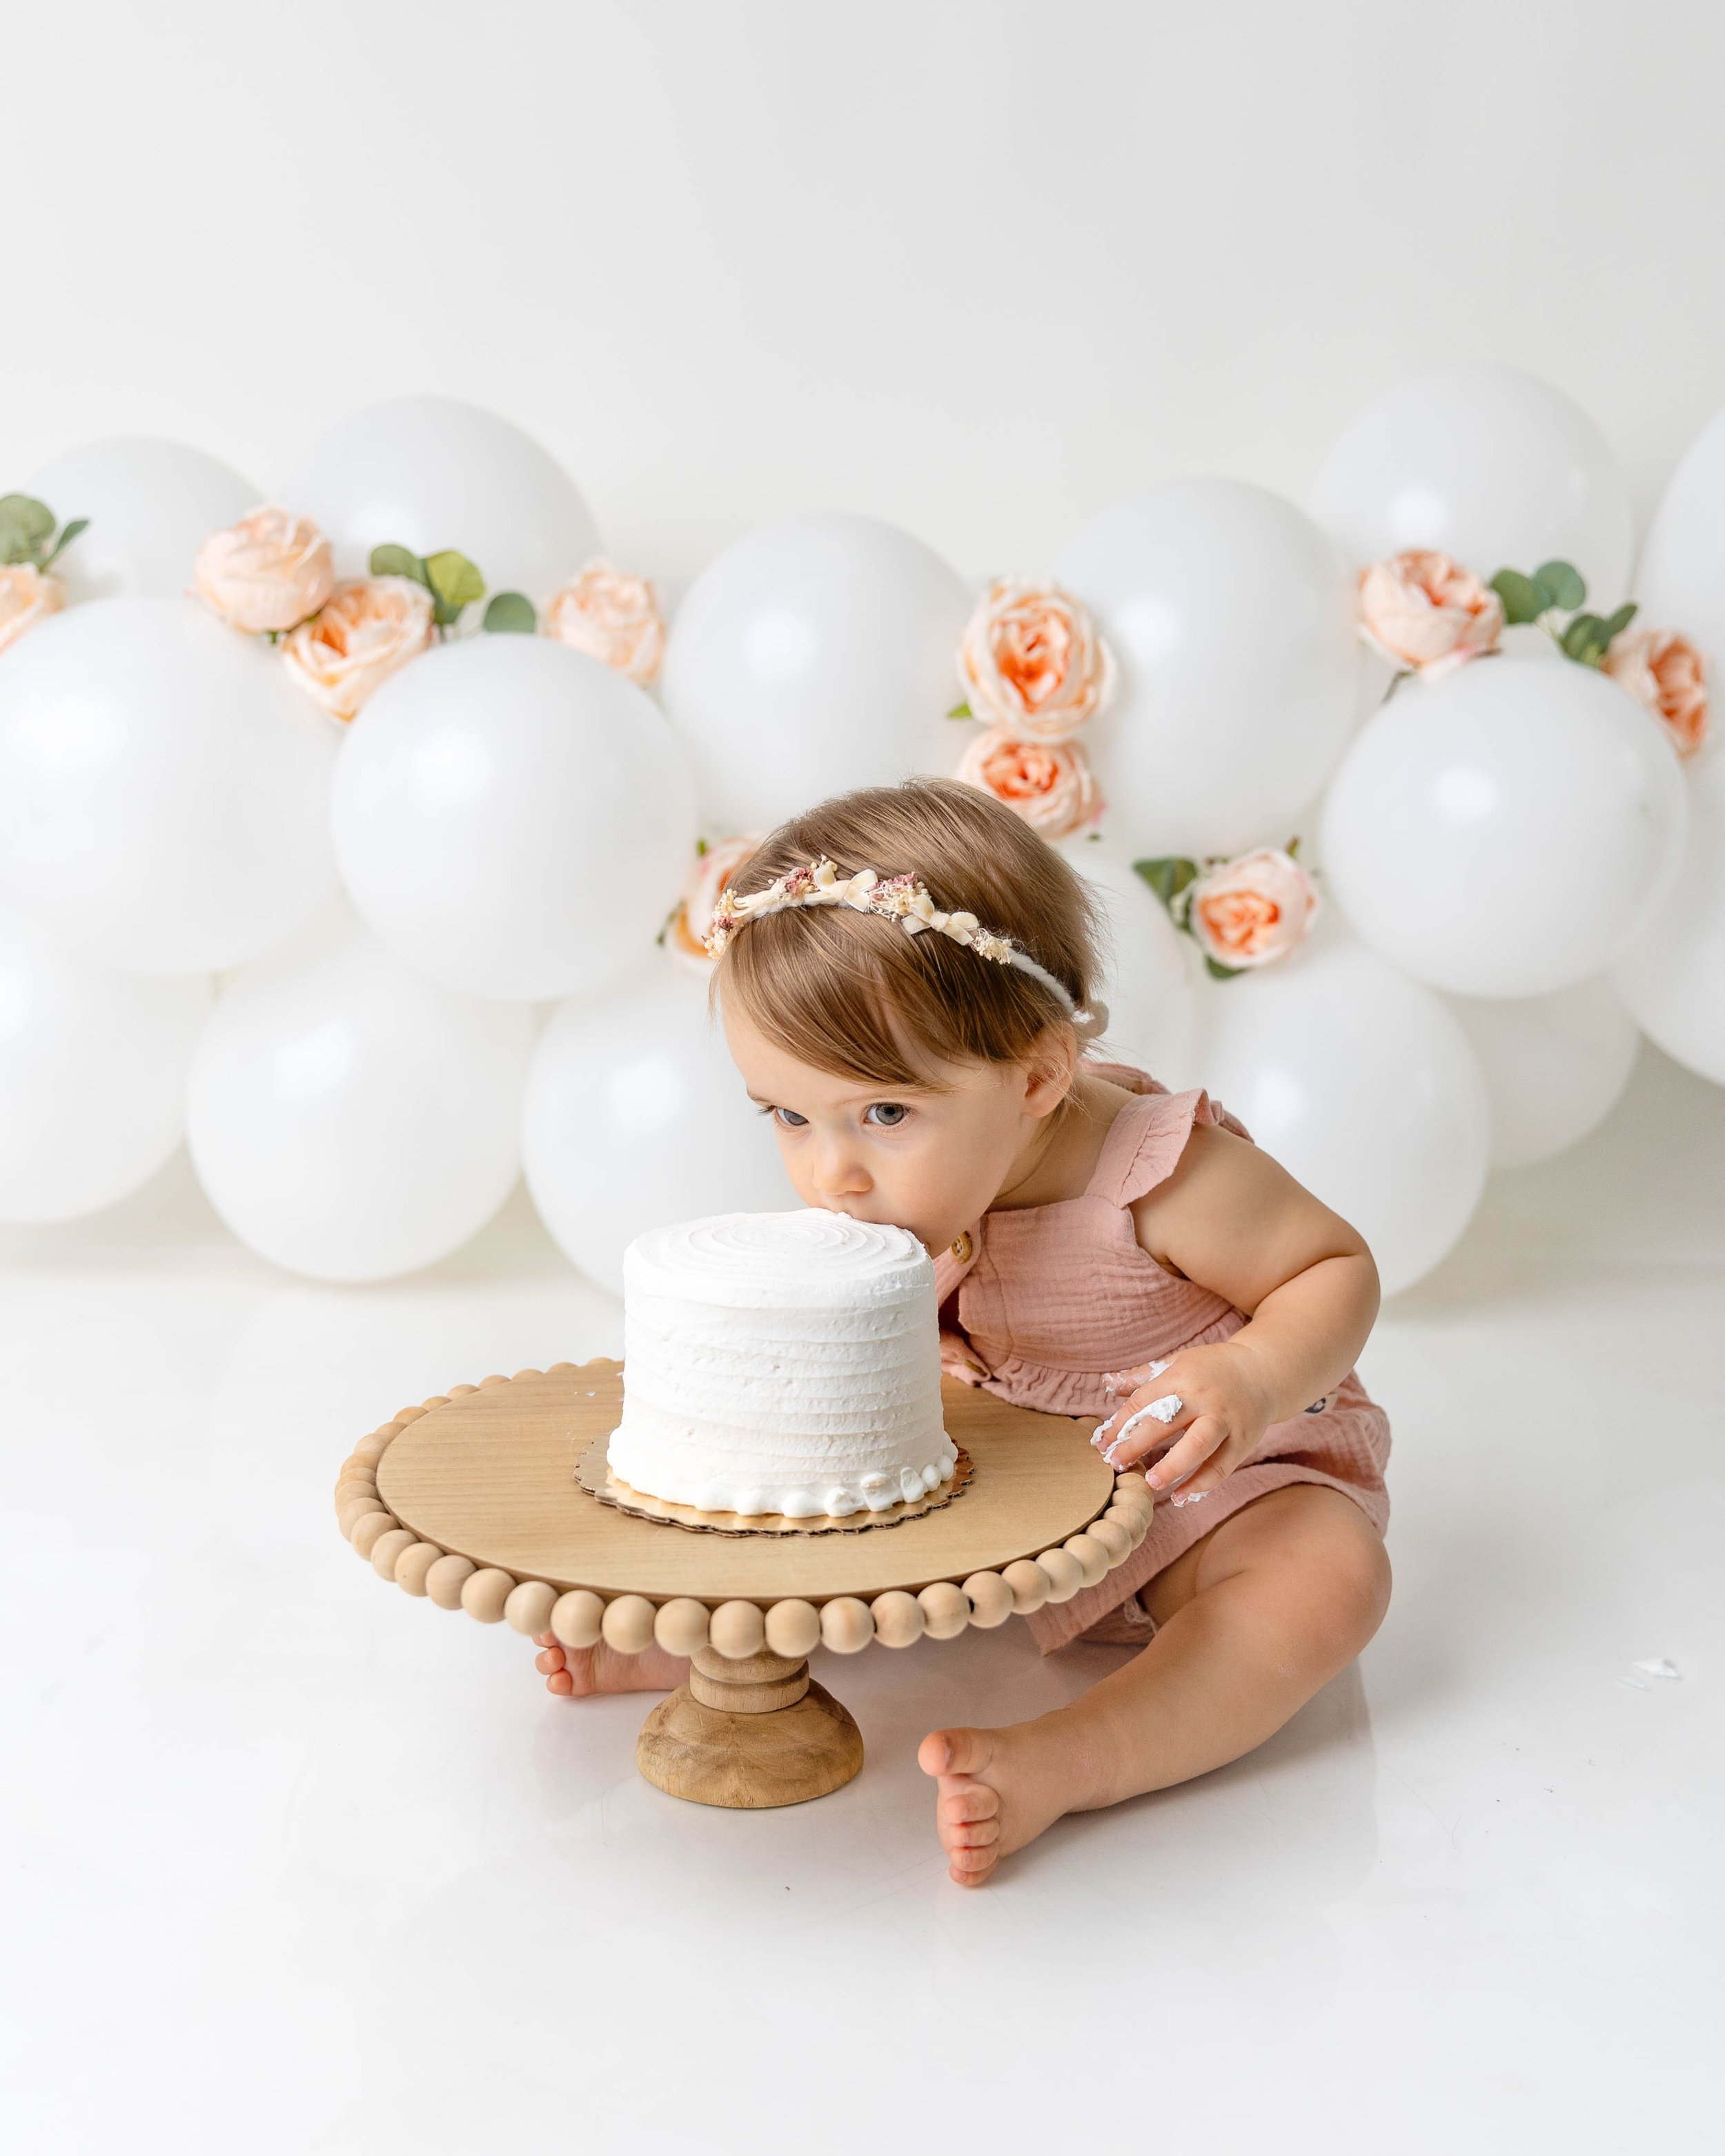 cake-smash-photos-first-birthday-images-newborn-photography-spokane-washington-7.jpg